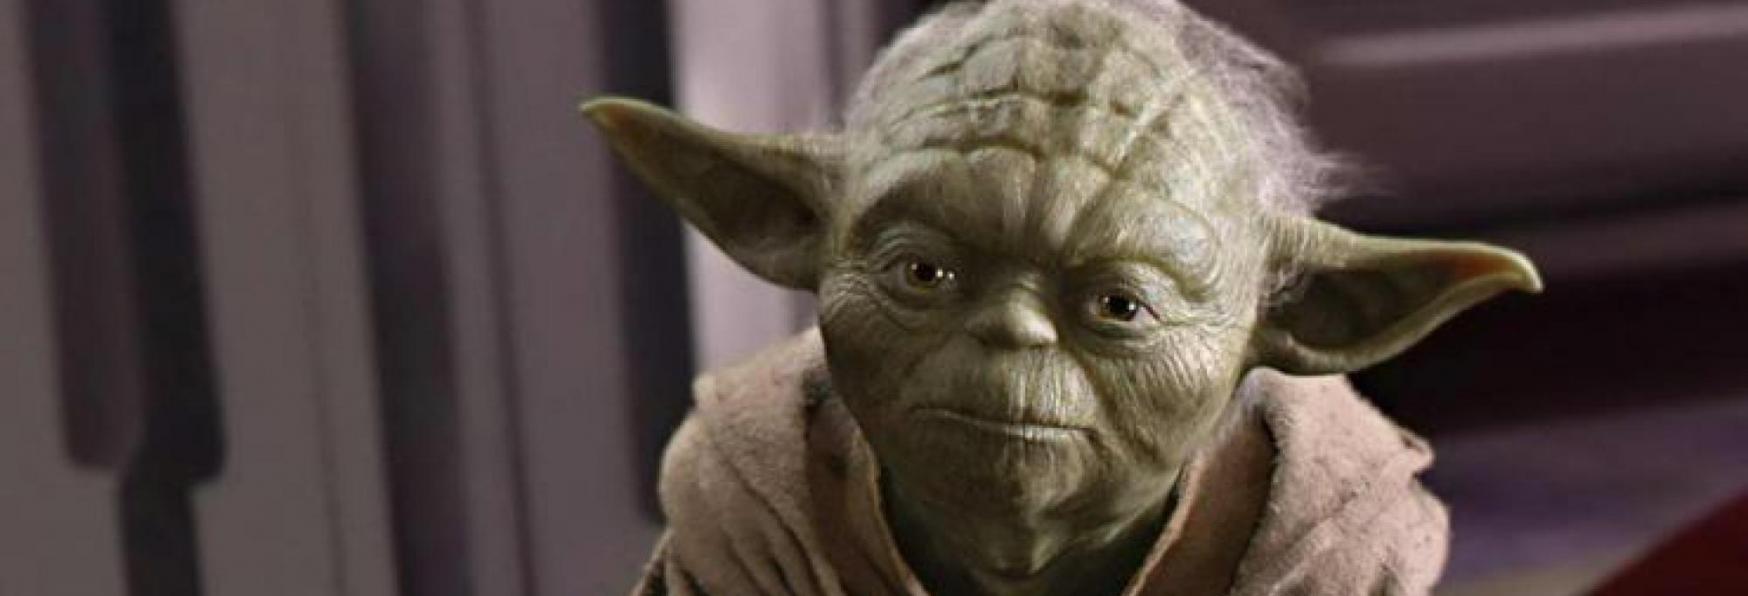 Obi-Wan Kenobi: Perché Yoda non è nella Serie TV? Risponde Ewan McGregor